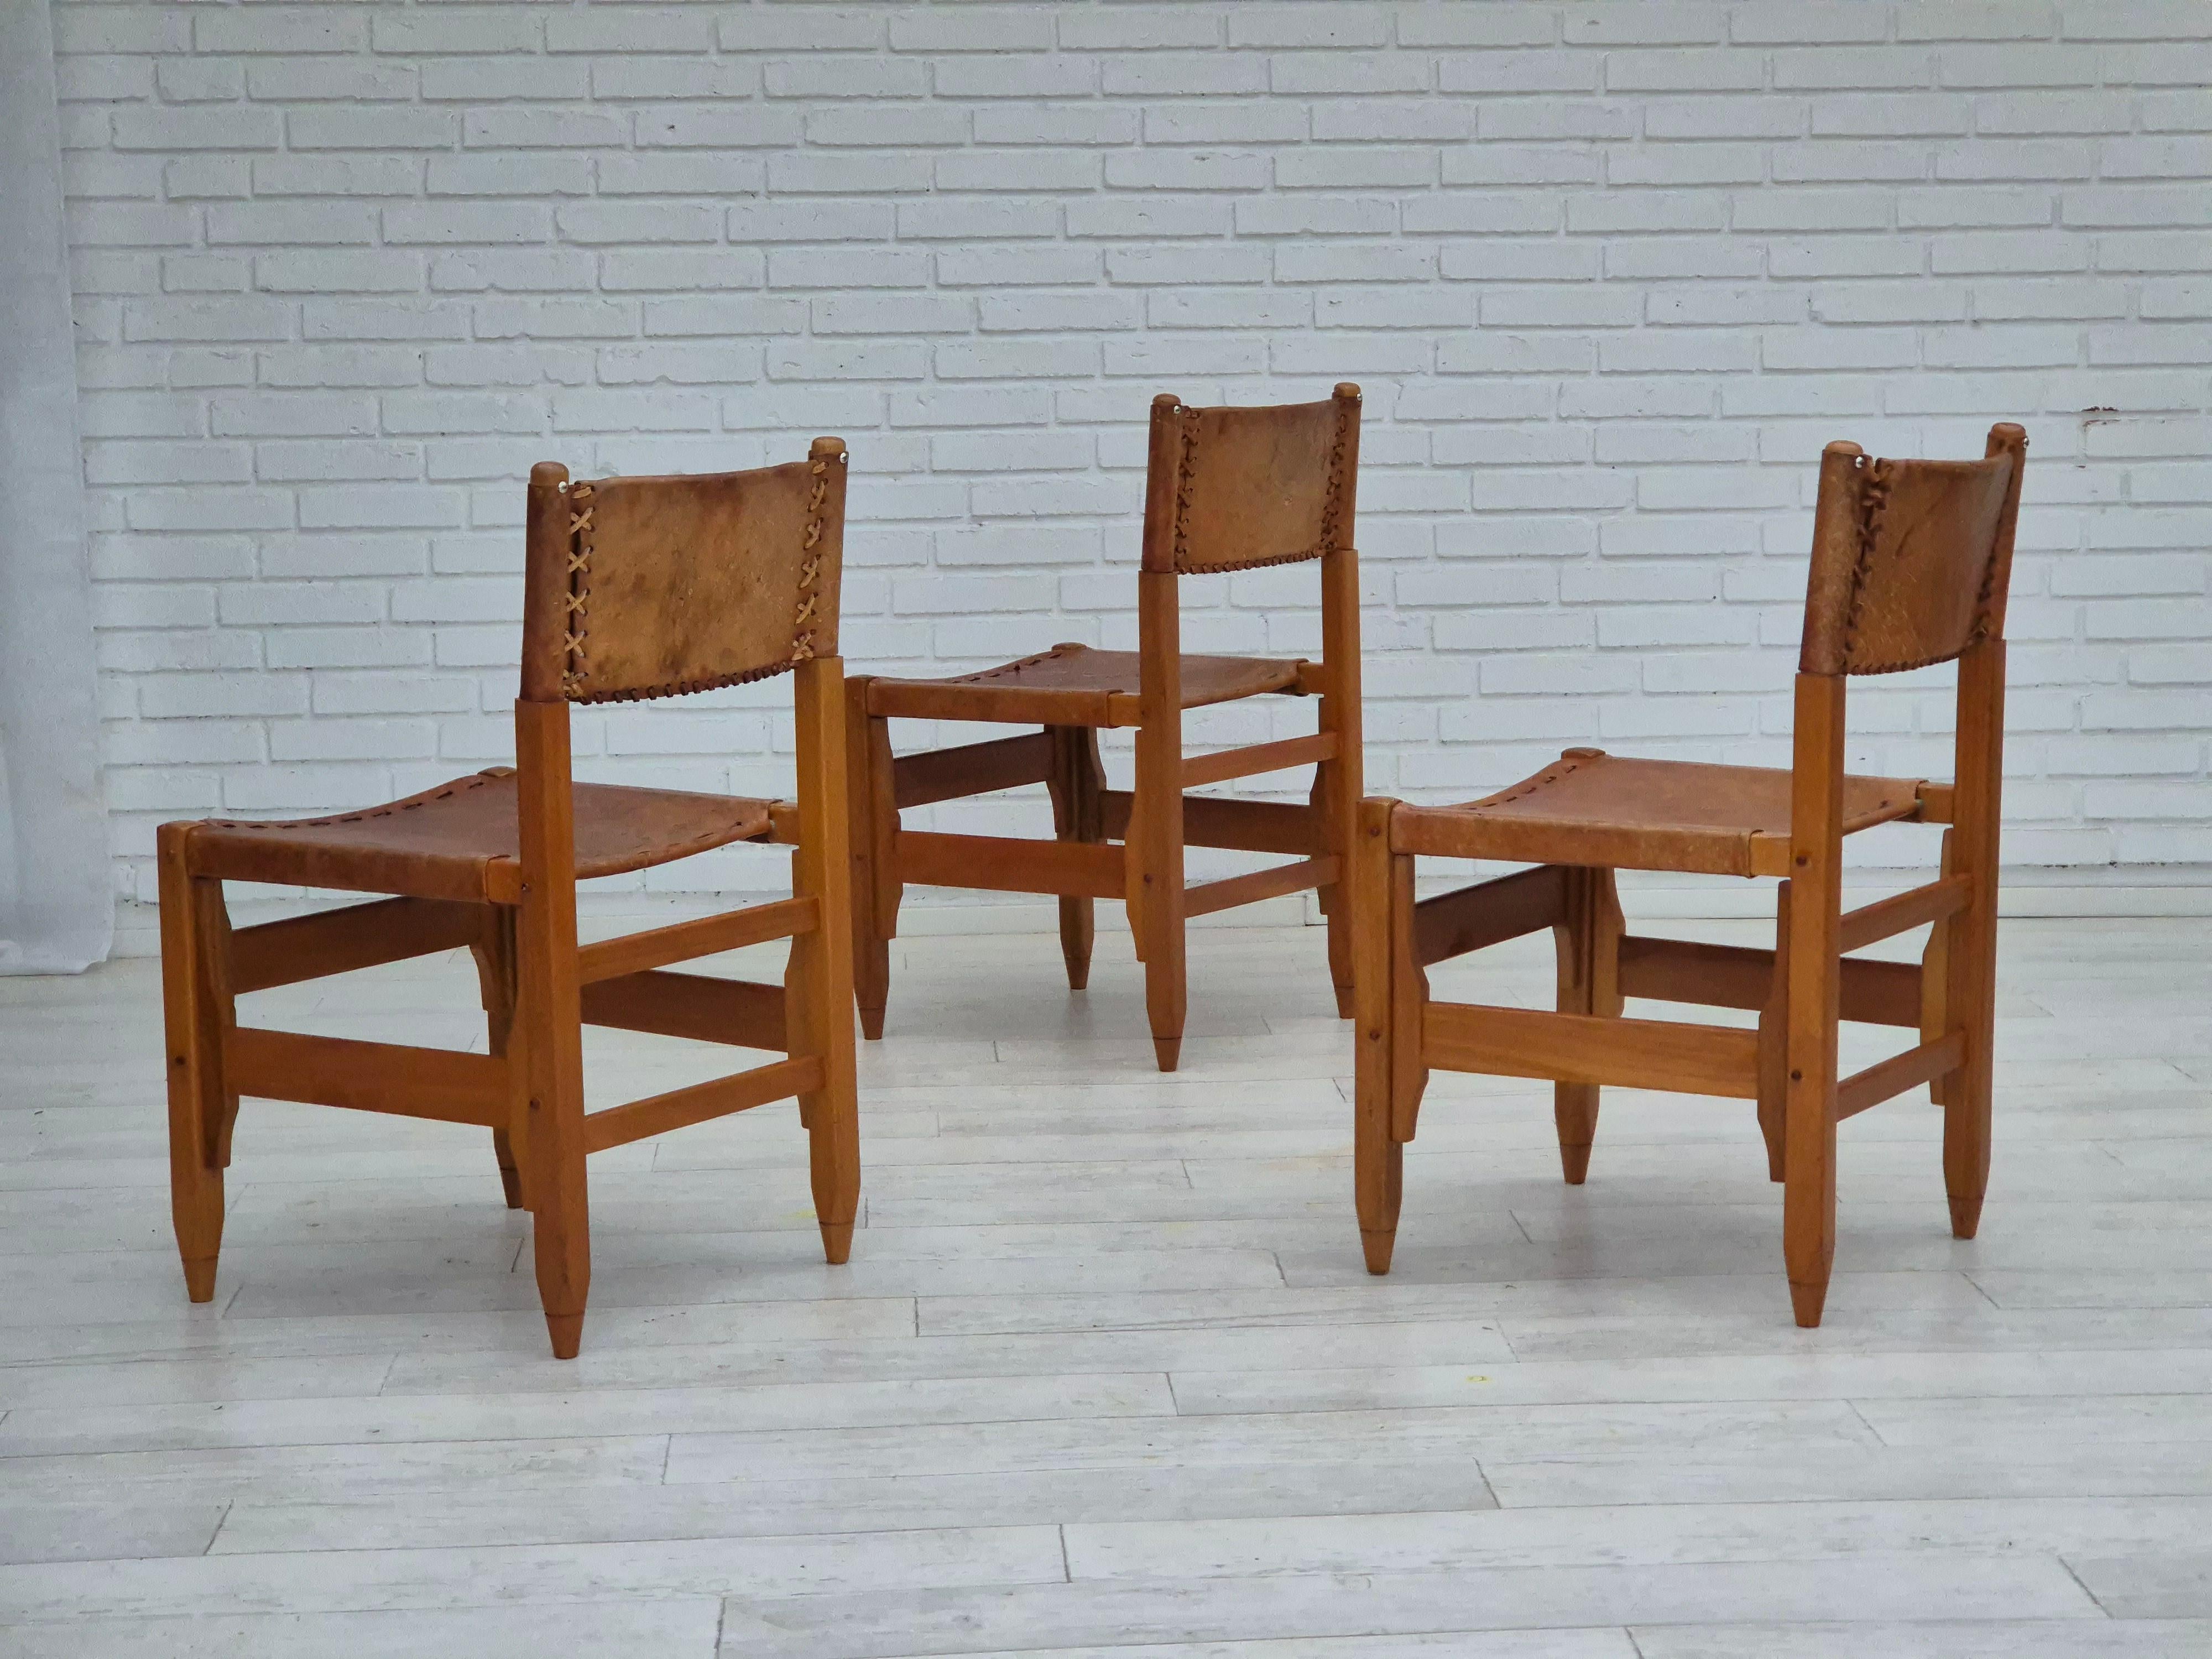 Colombian 1960s, Werner Biermann design for Arte Sano, set of three chairs, original.